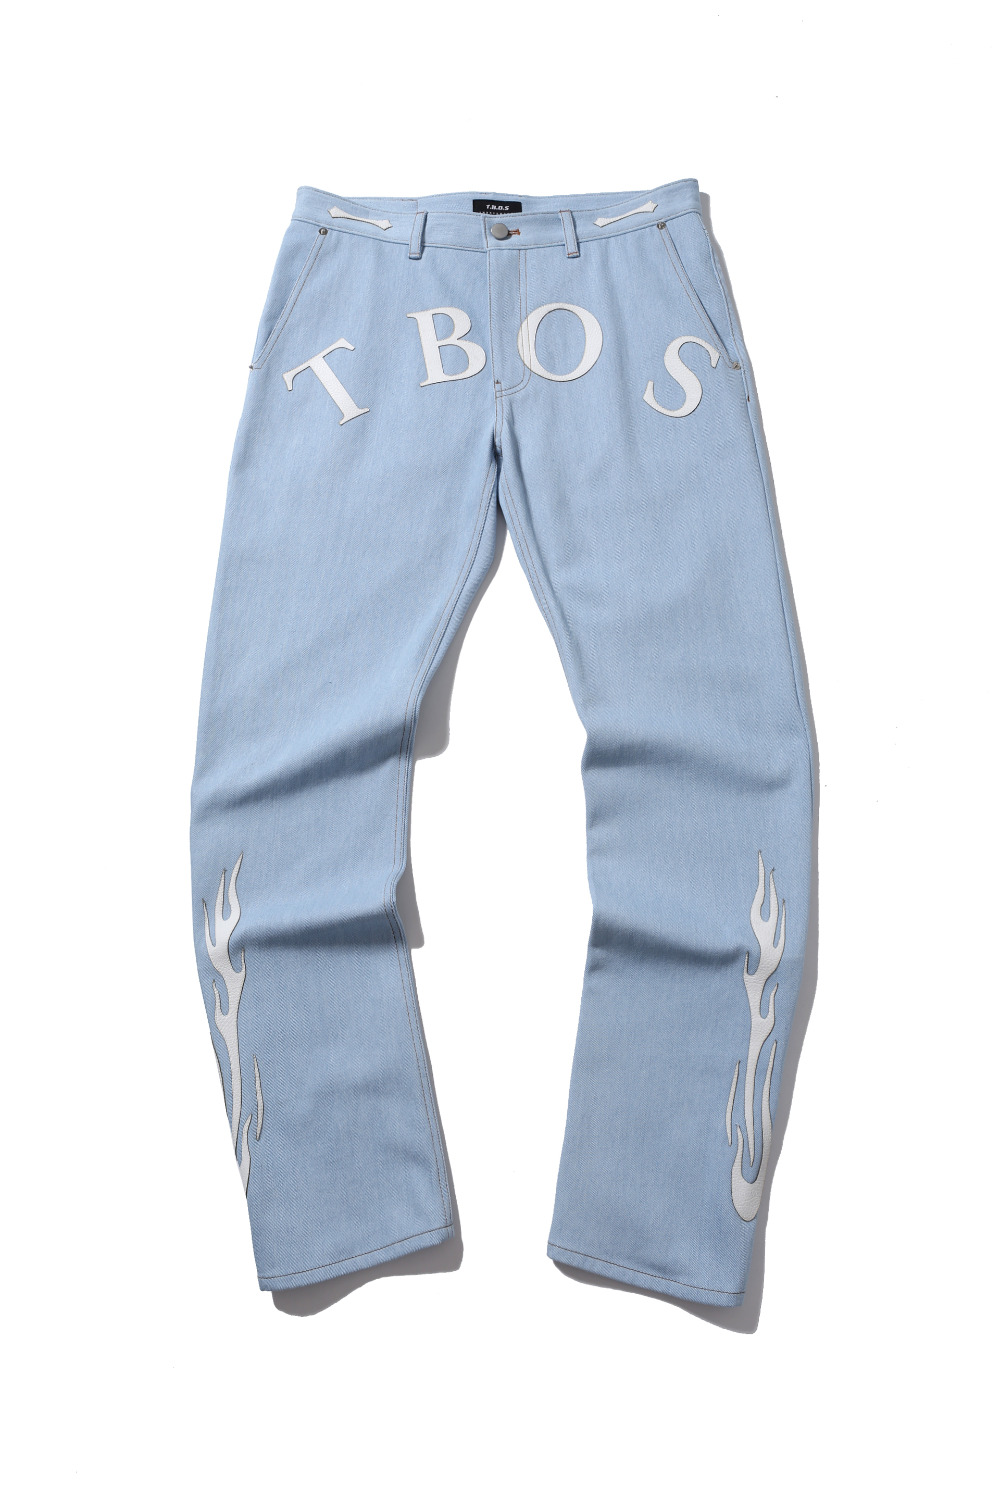 T.B.O.S Flame denim pants (Light blue)